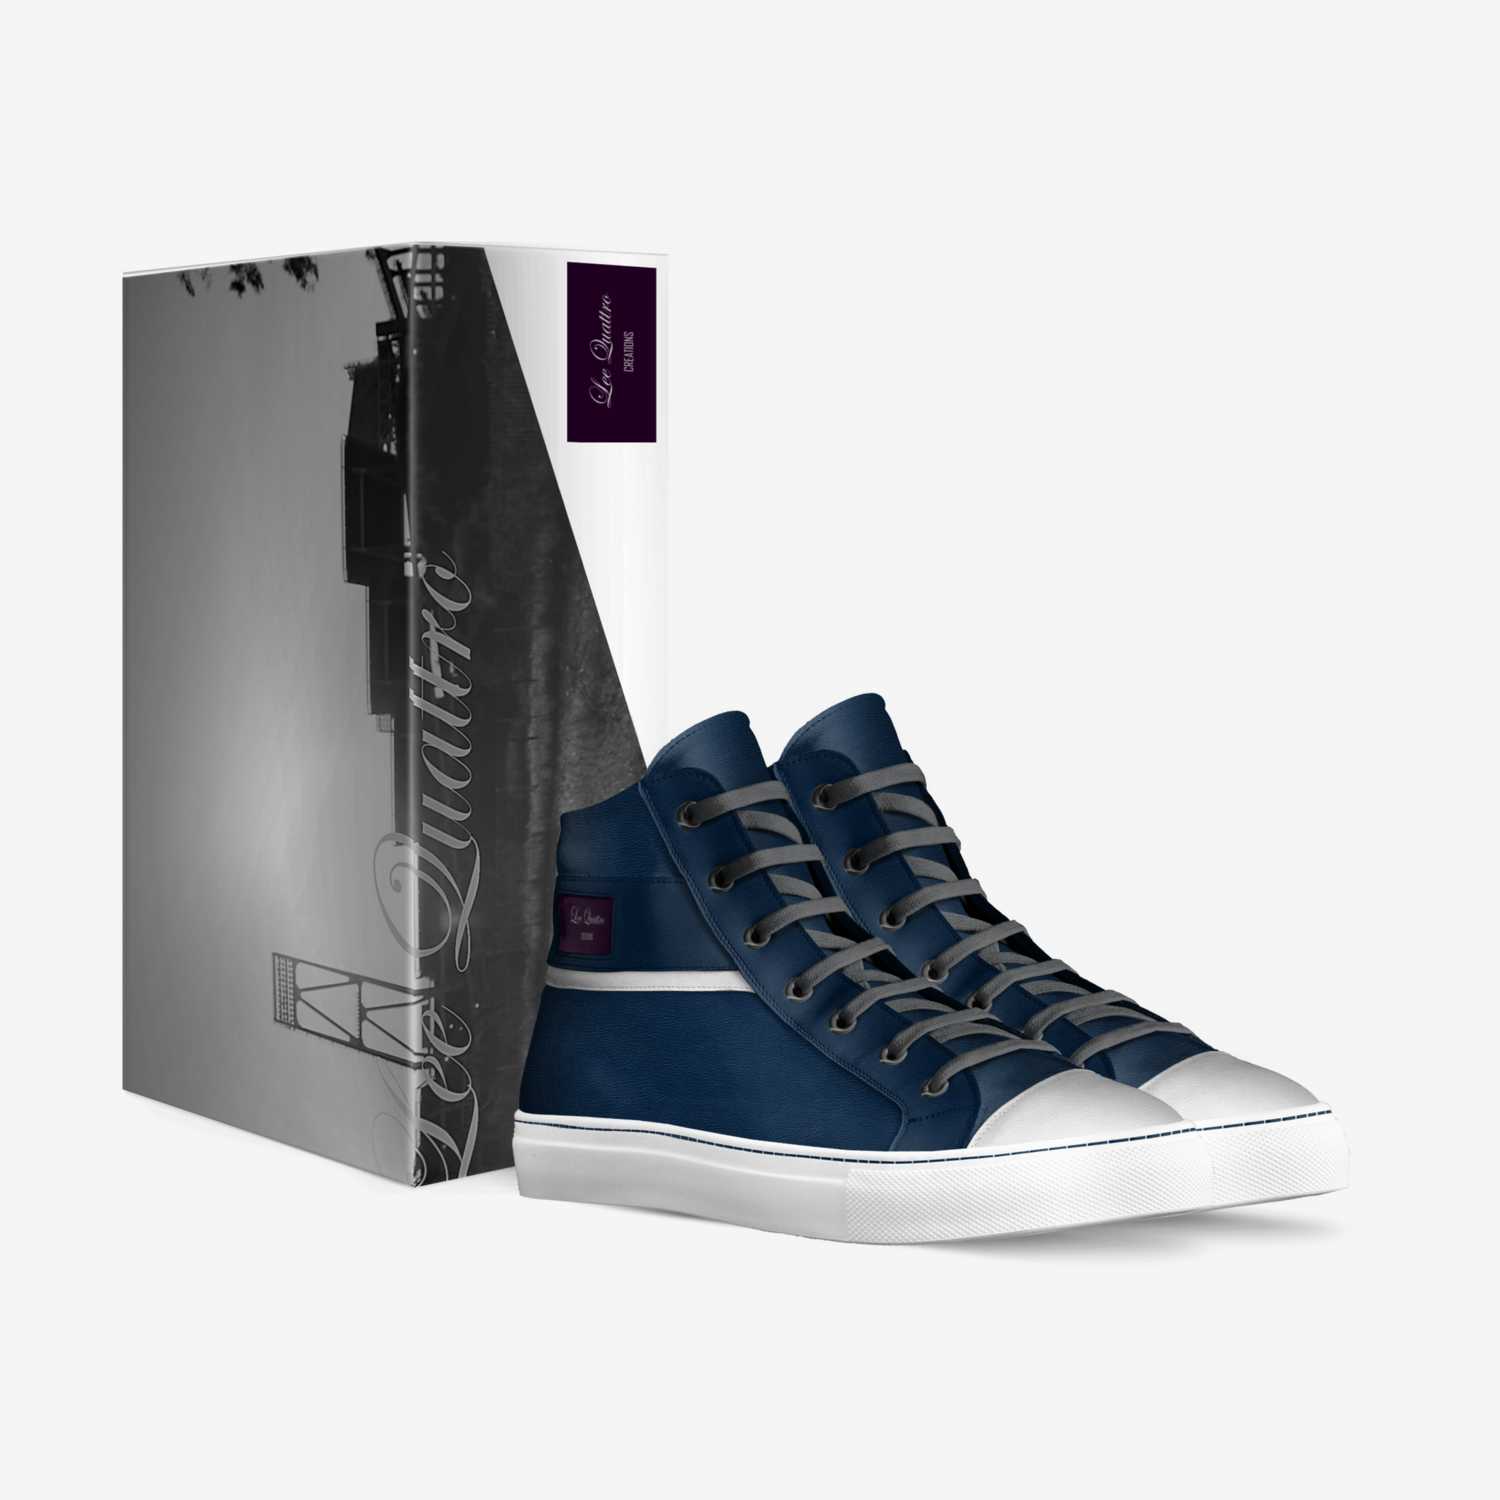 LQ Unit custom made in Italy shoes by Takura M | Box view